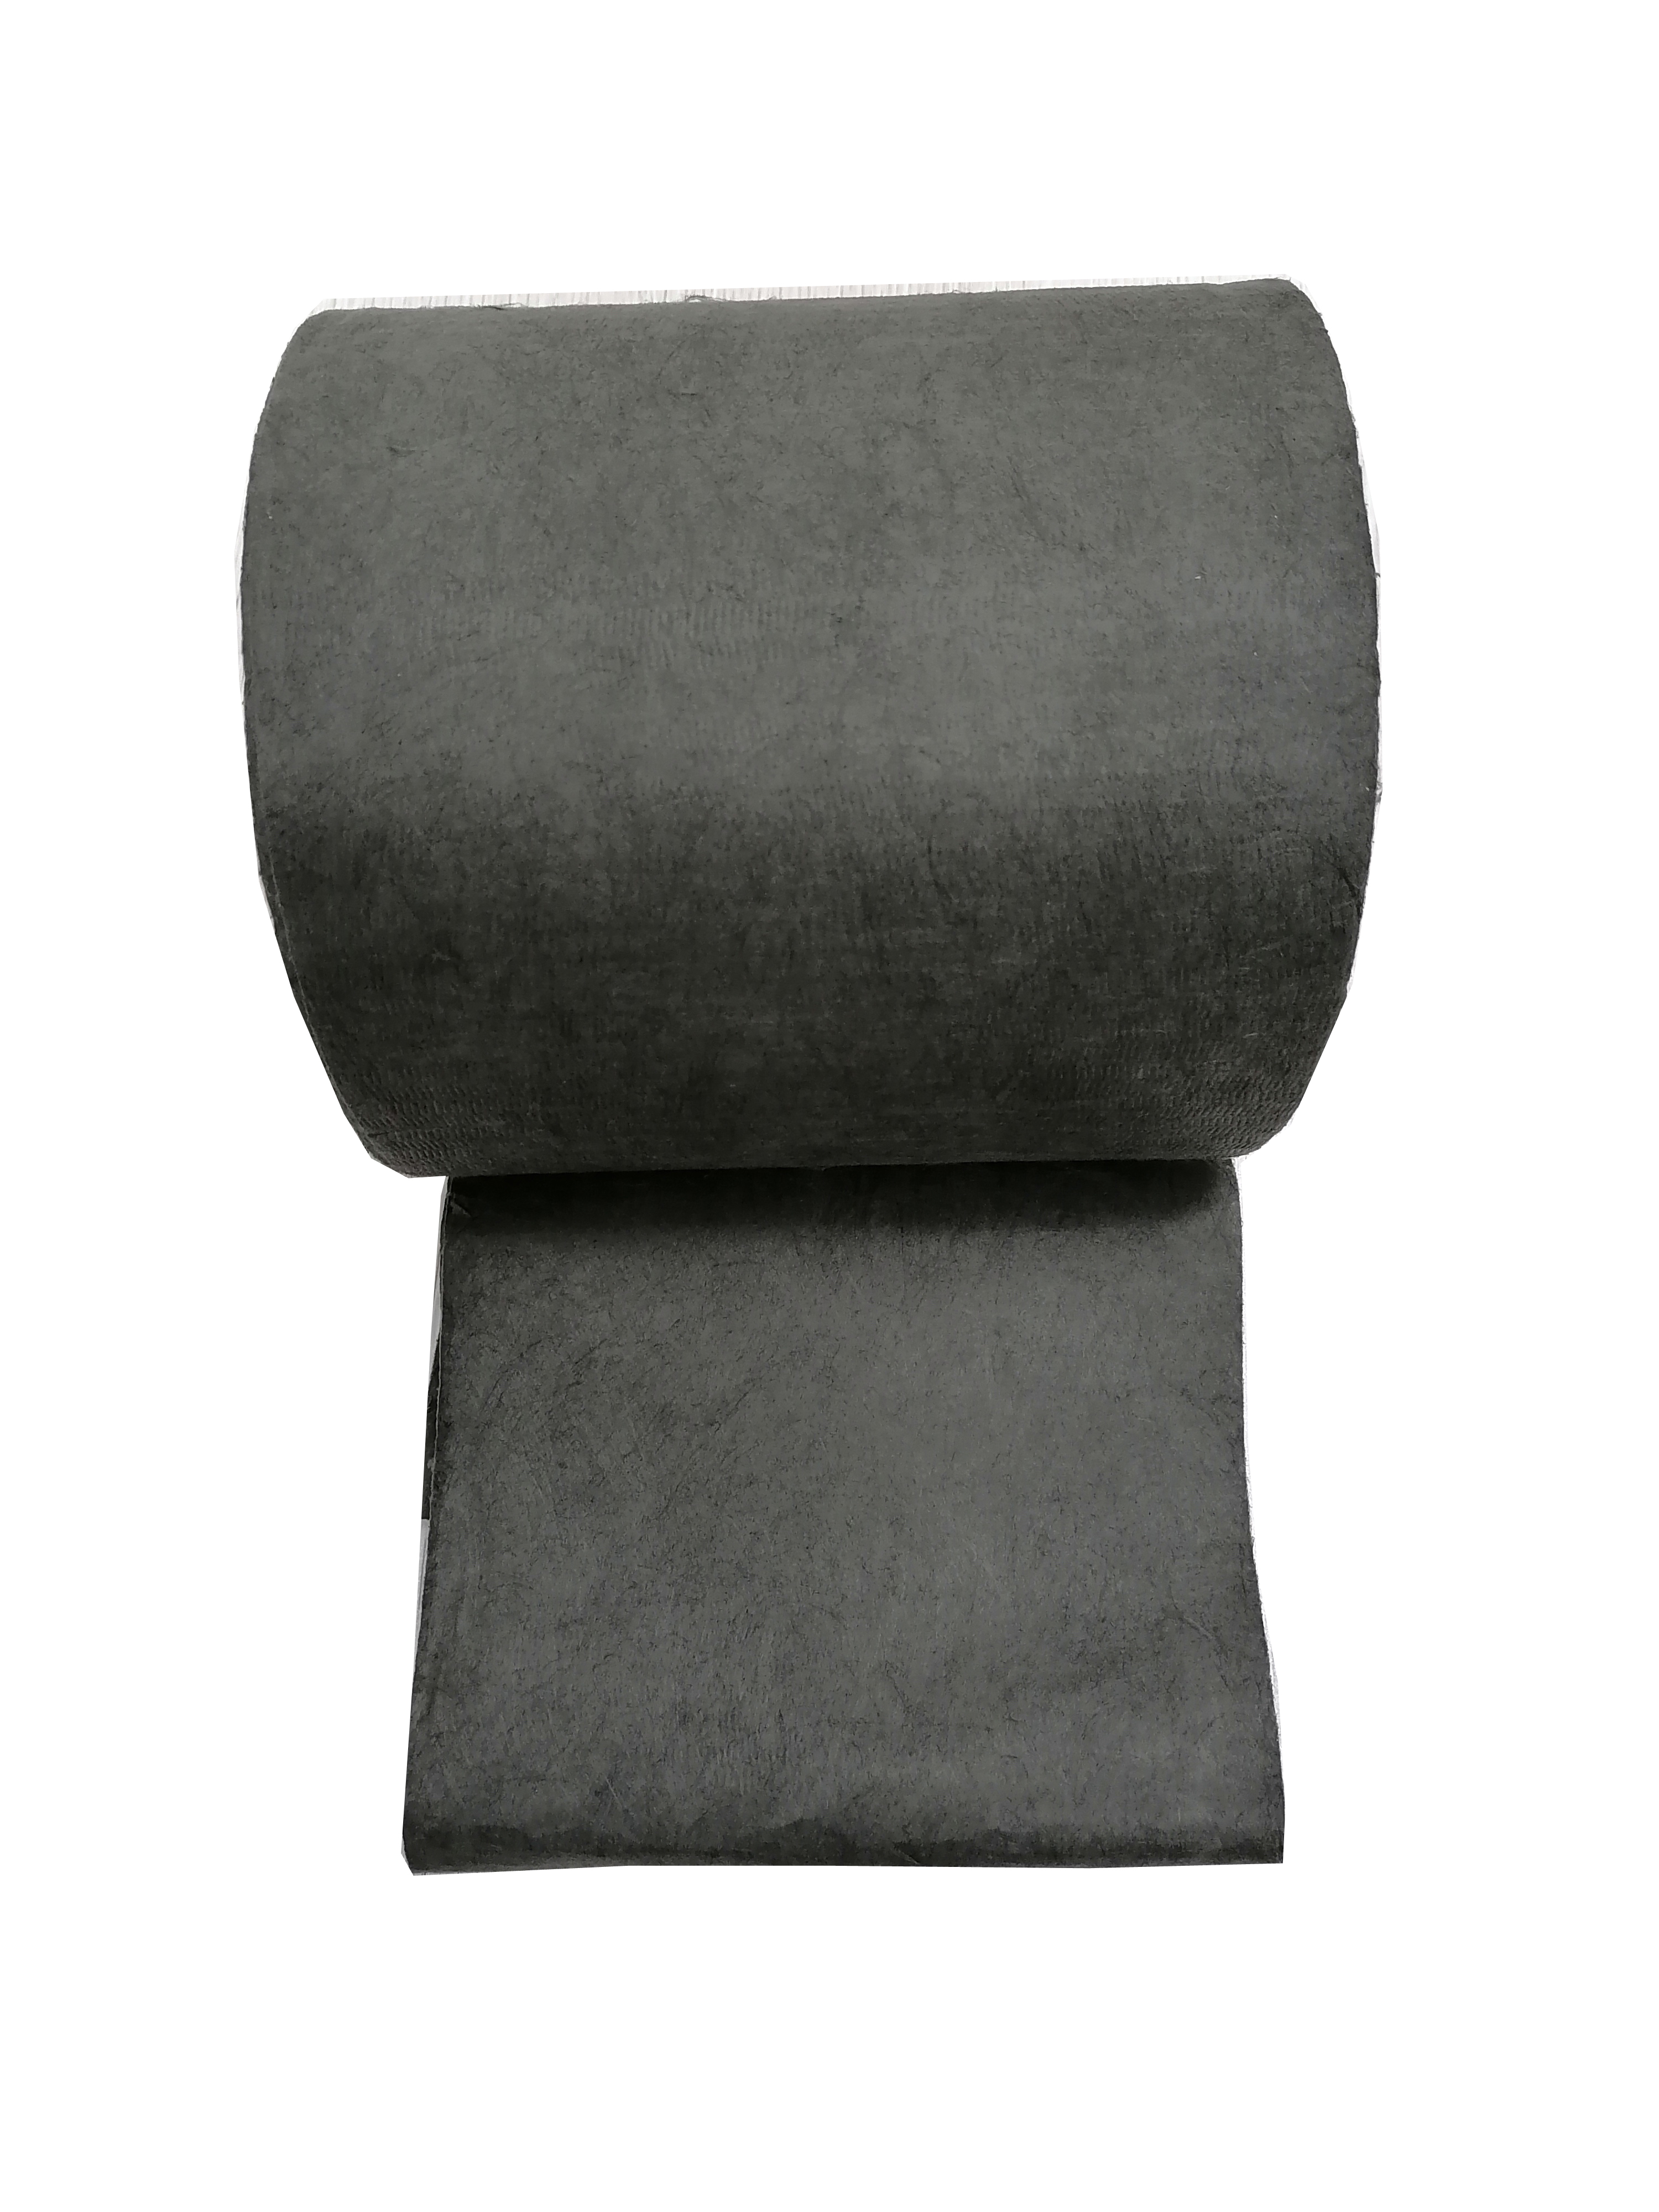 25gsm Disposable Polypropylene Nonwoven Fabric Cloth Popular Material for Medical Meltblown Non Woven Fabric Roll